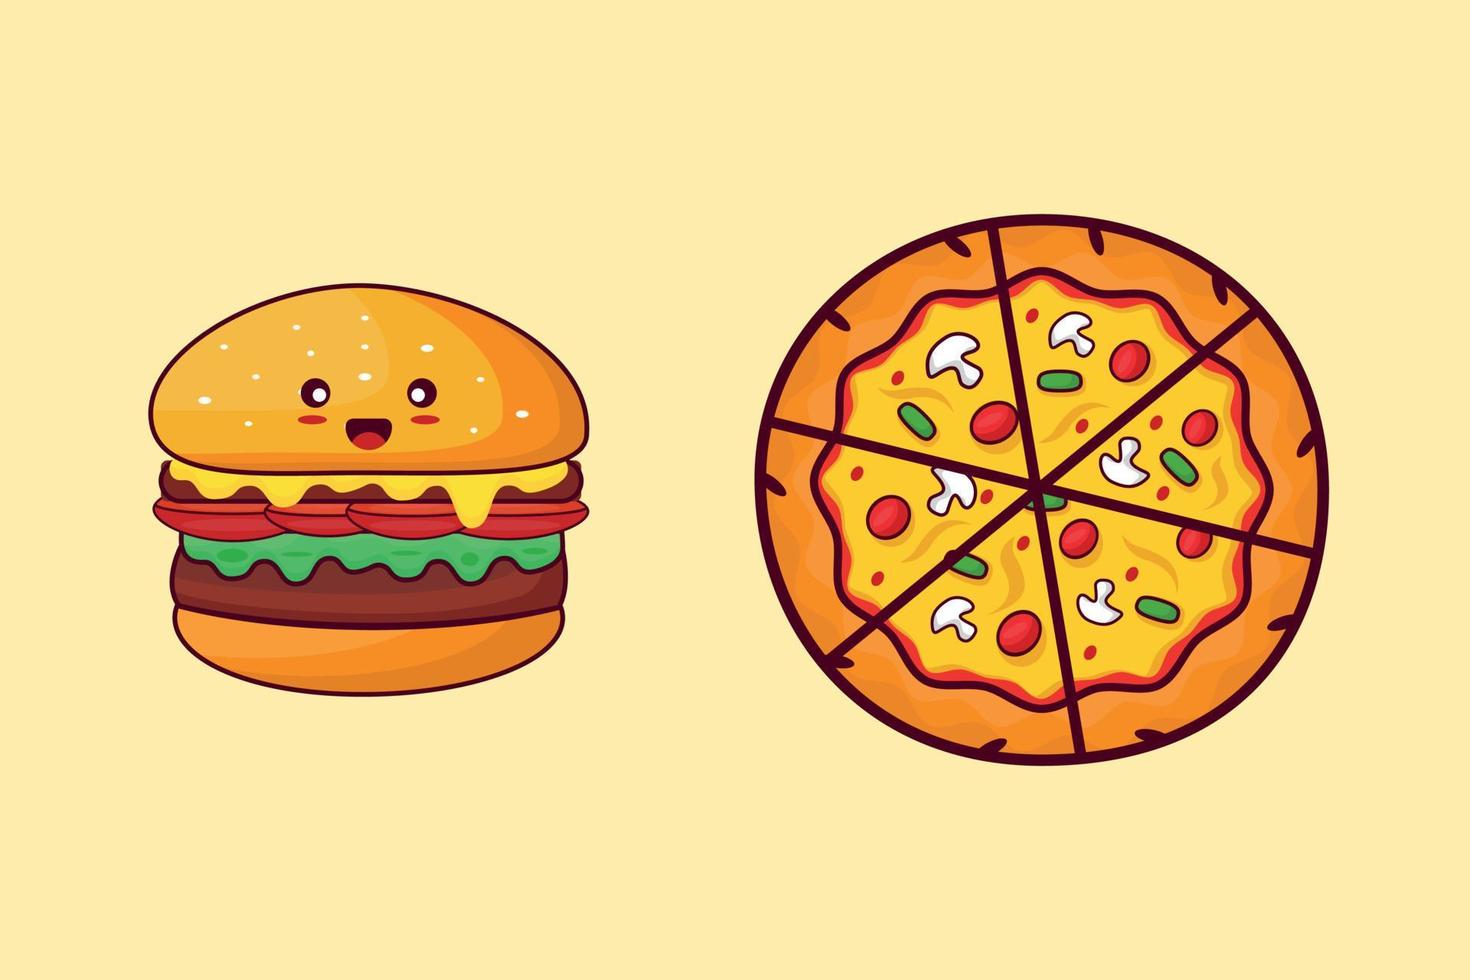 velozes Comida hamburguer pizza desenho animado estilo ilustração Projeto vetor